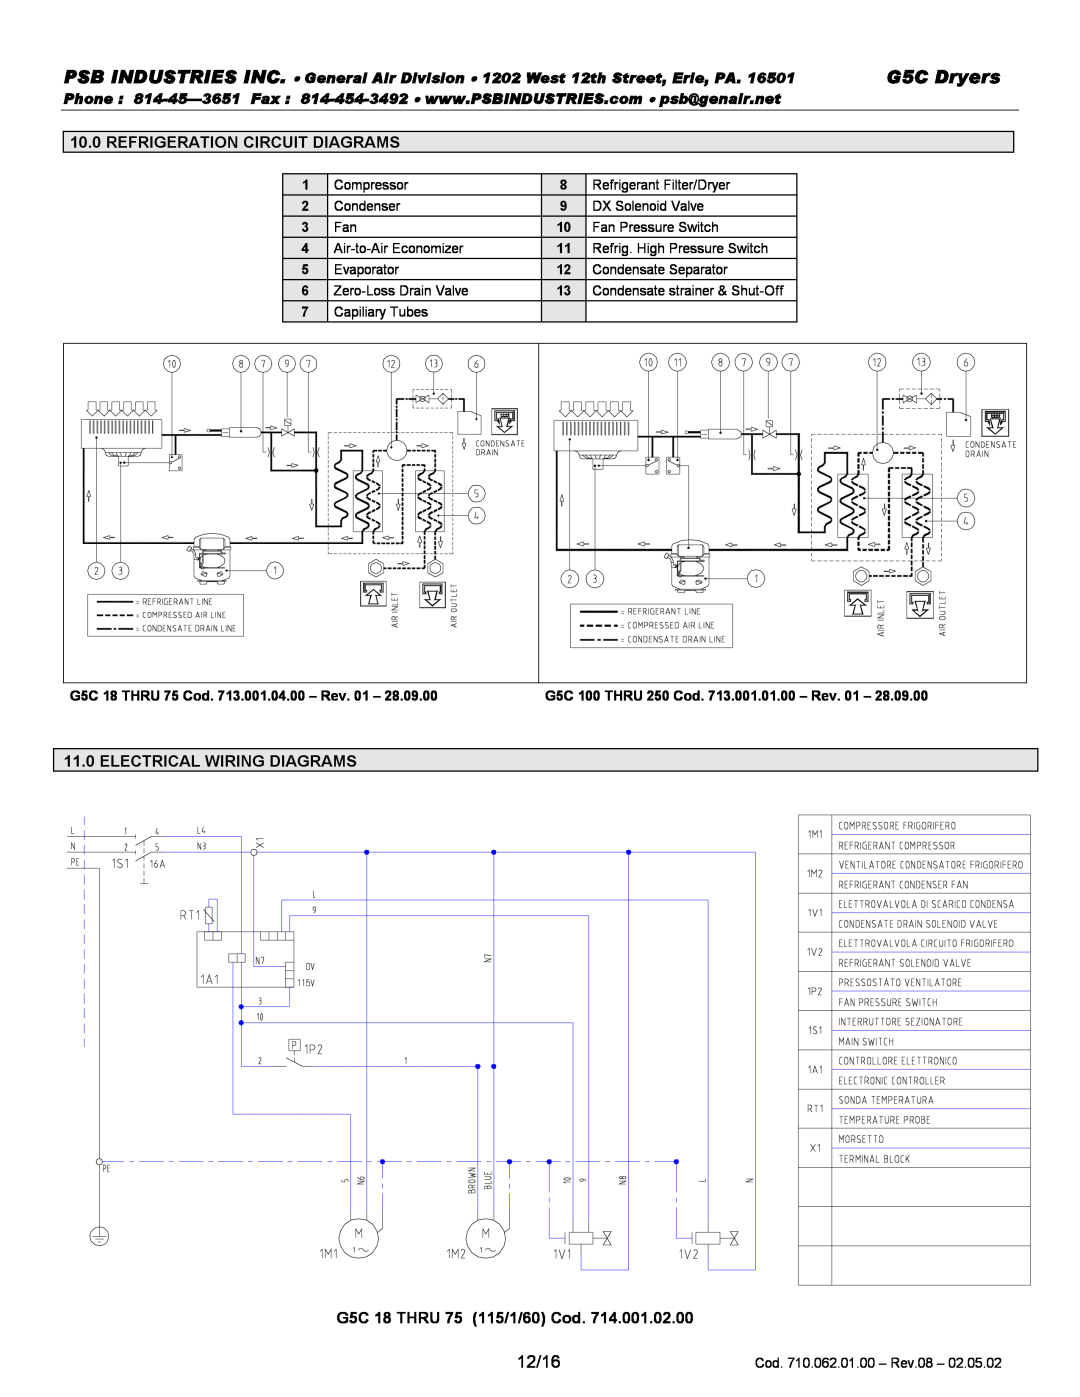 PSB Speakers G5C 0250 12/16, Refrigeration Circuit Diagrams, Electrical Wiring Diagrams, G5C 18 THRU 75 115/1/60 Cod 